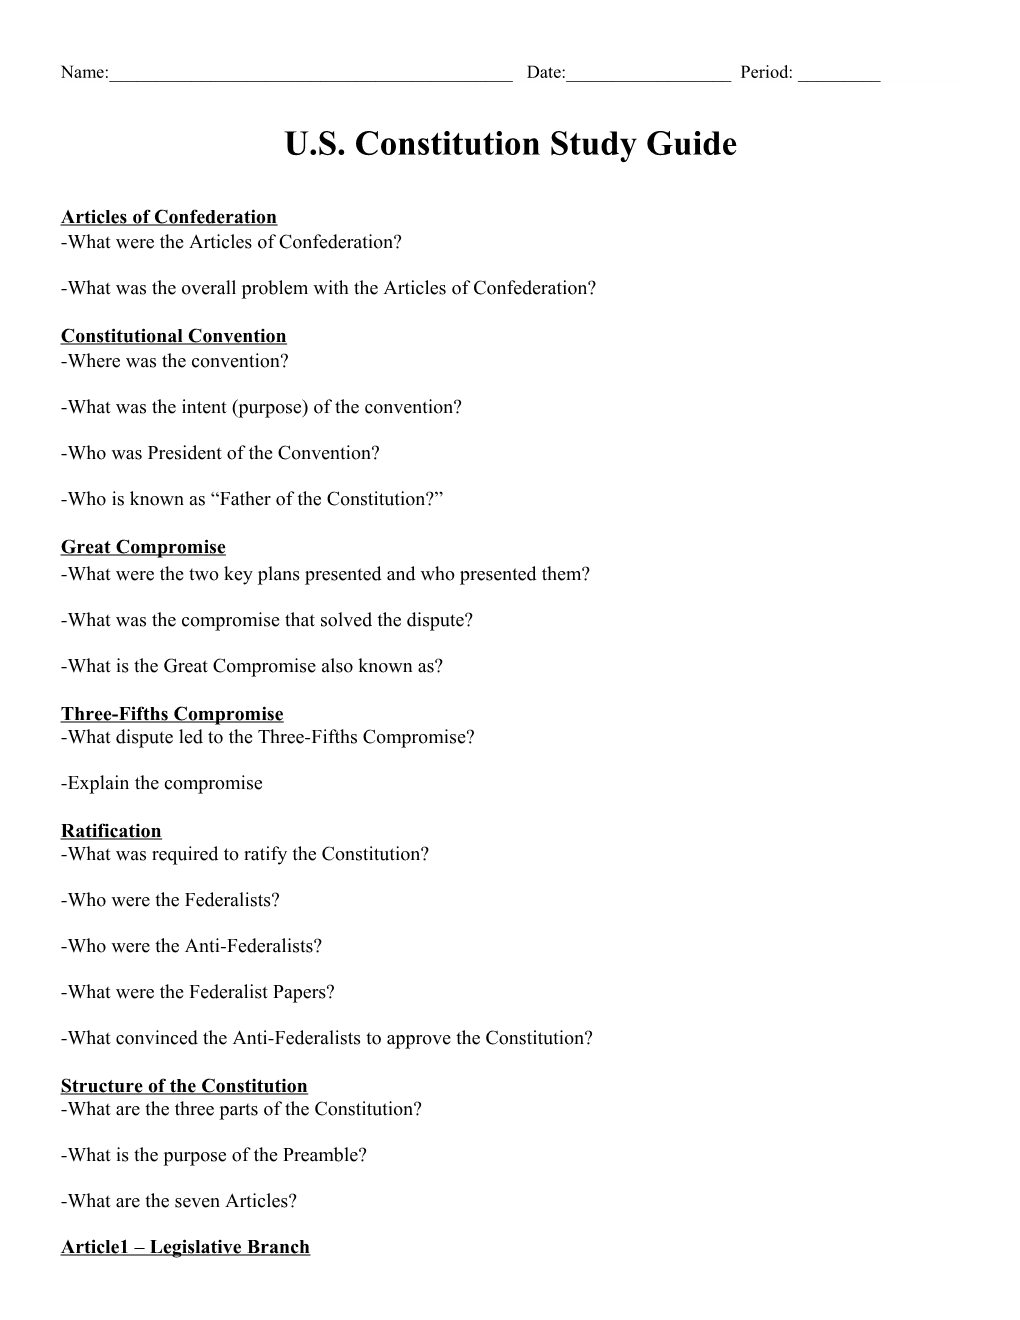 U.S. Constitution Study Guide